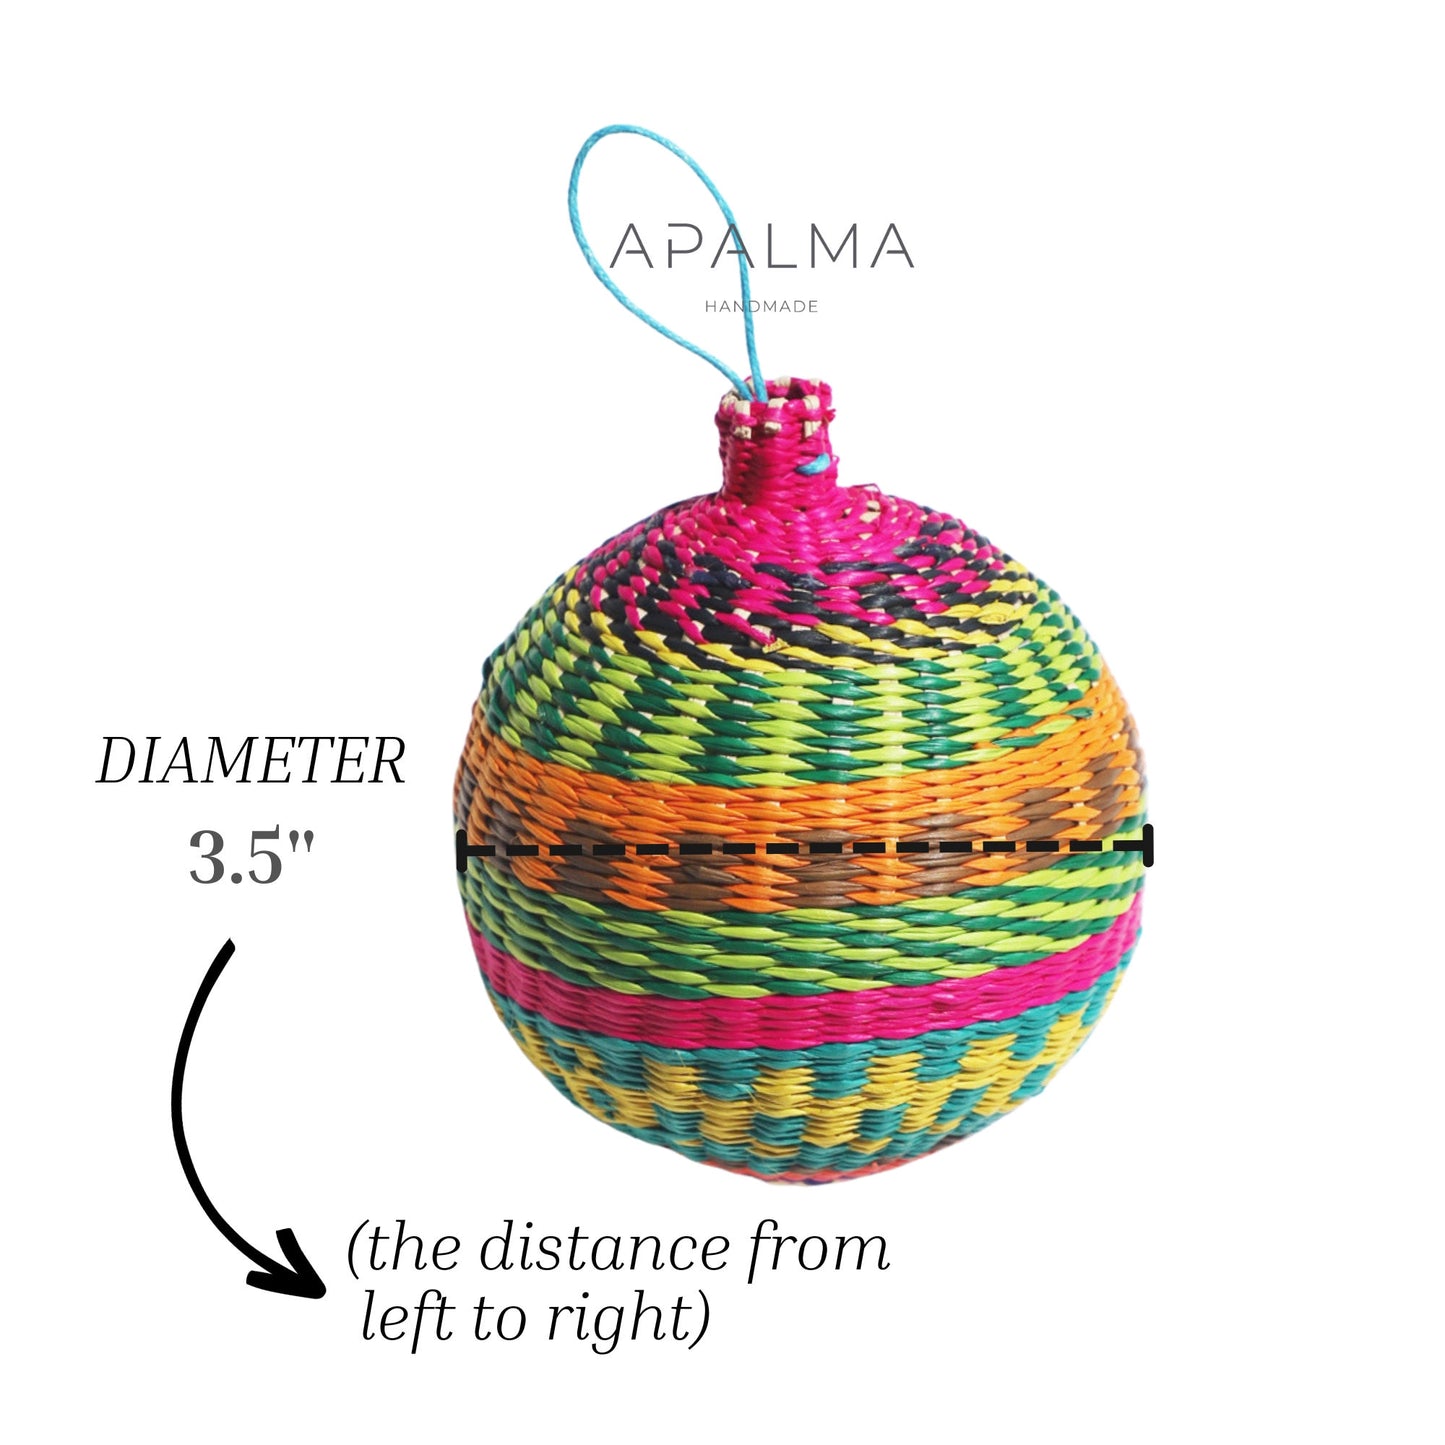 Christmas Balls / Ornaments Bright Colors- Handmade in Iraca Palm , 3" Diameter